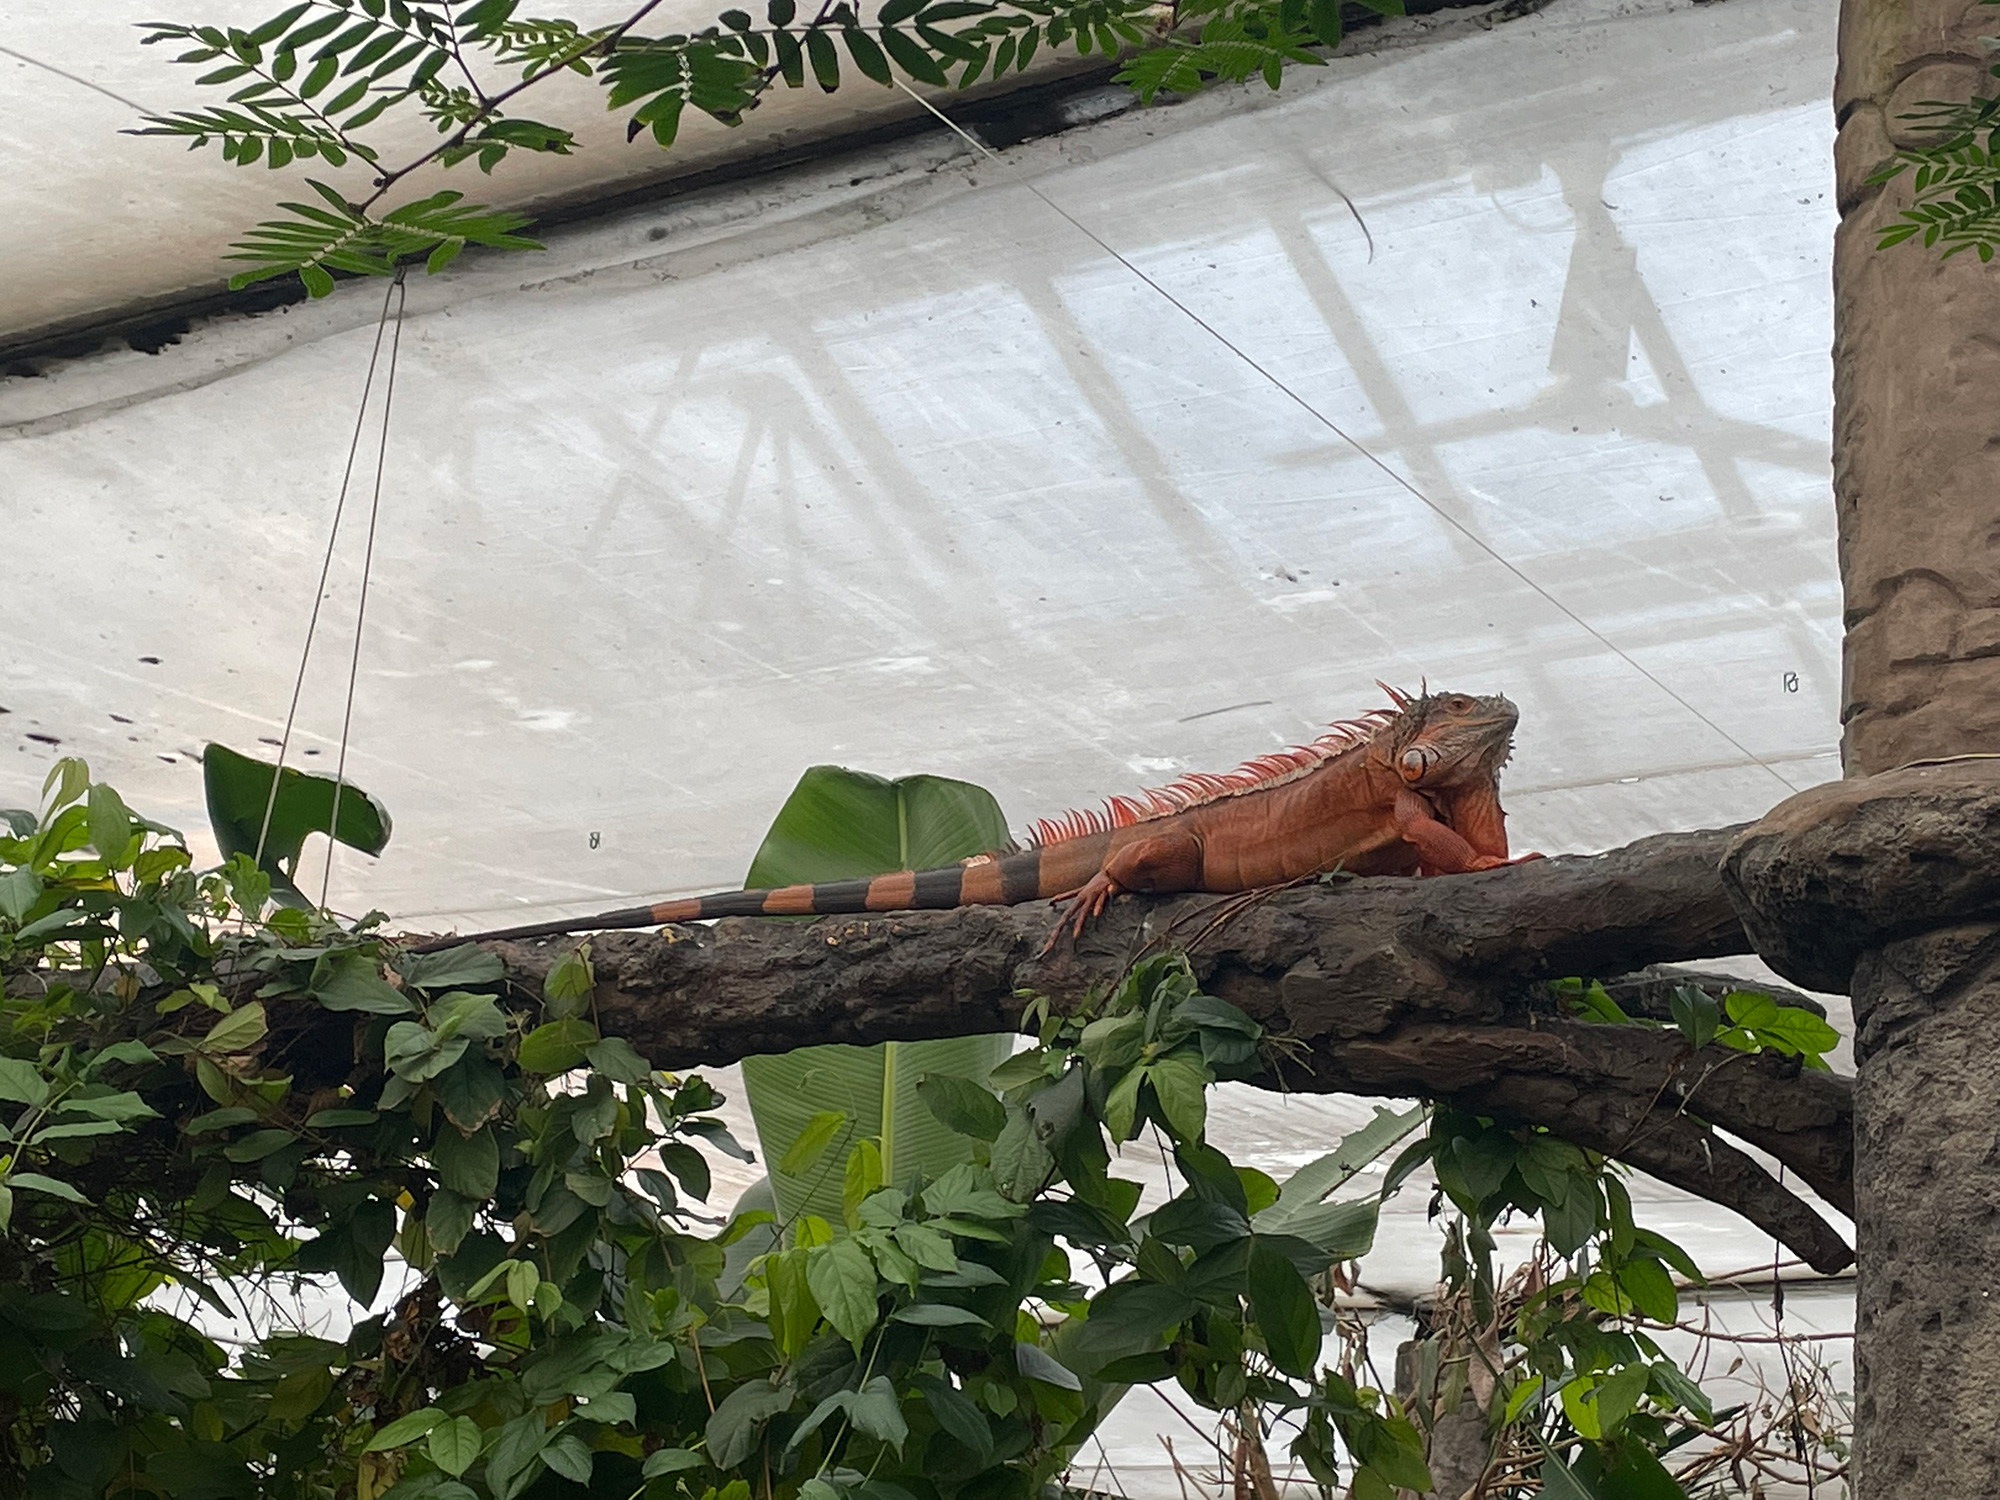 An iguana lazes on a branch at Stratford Butterfly Farm